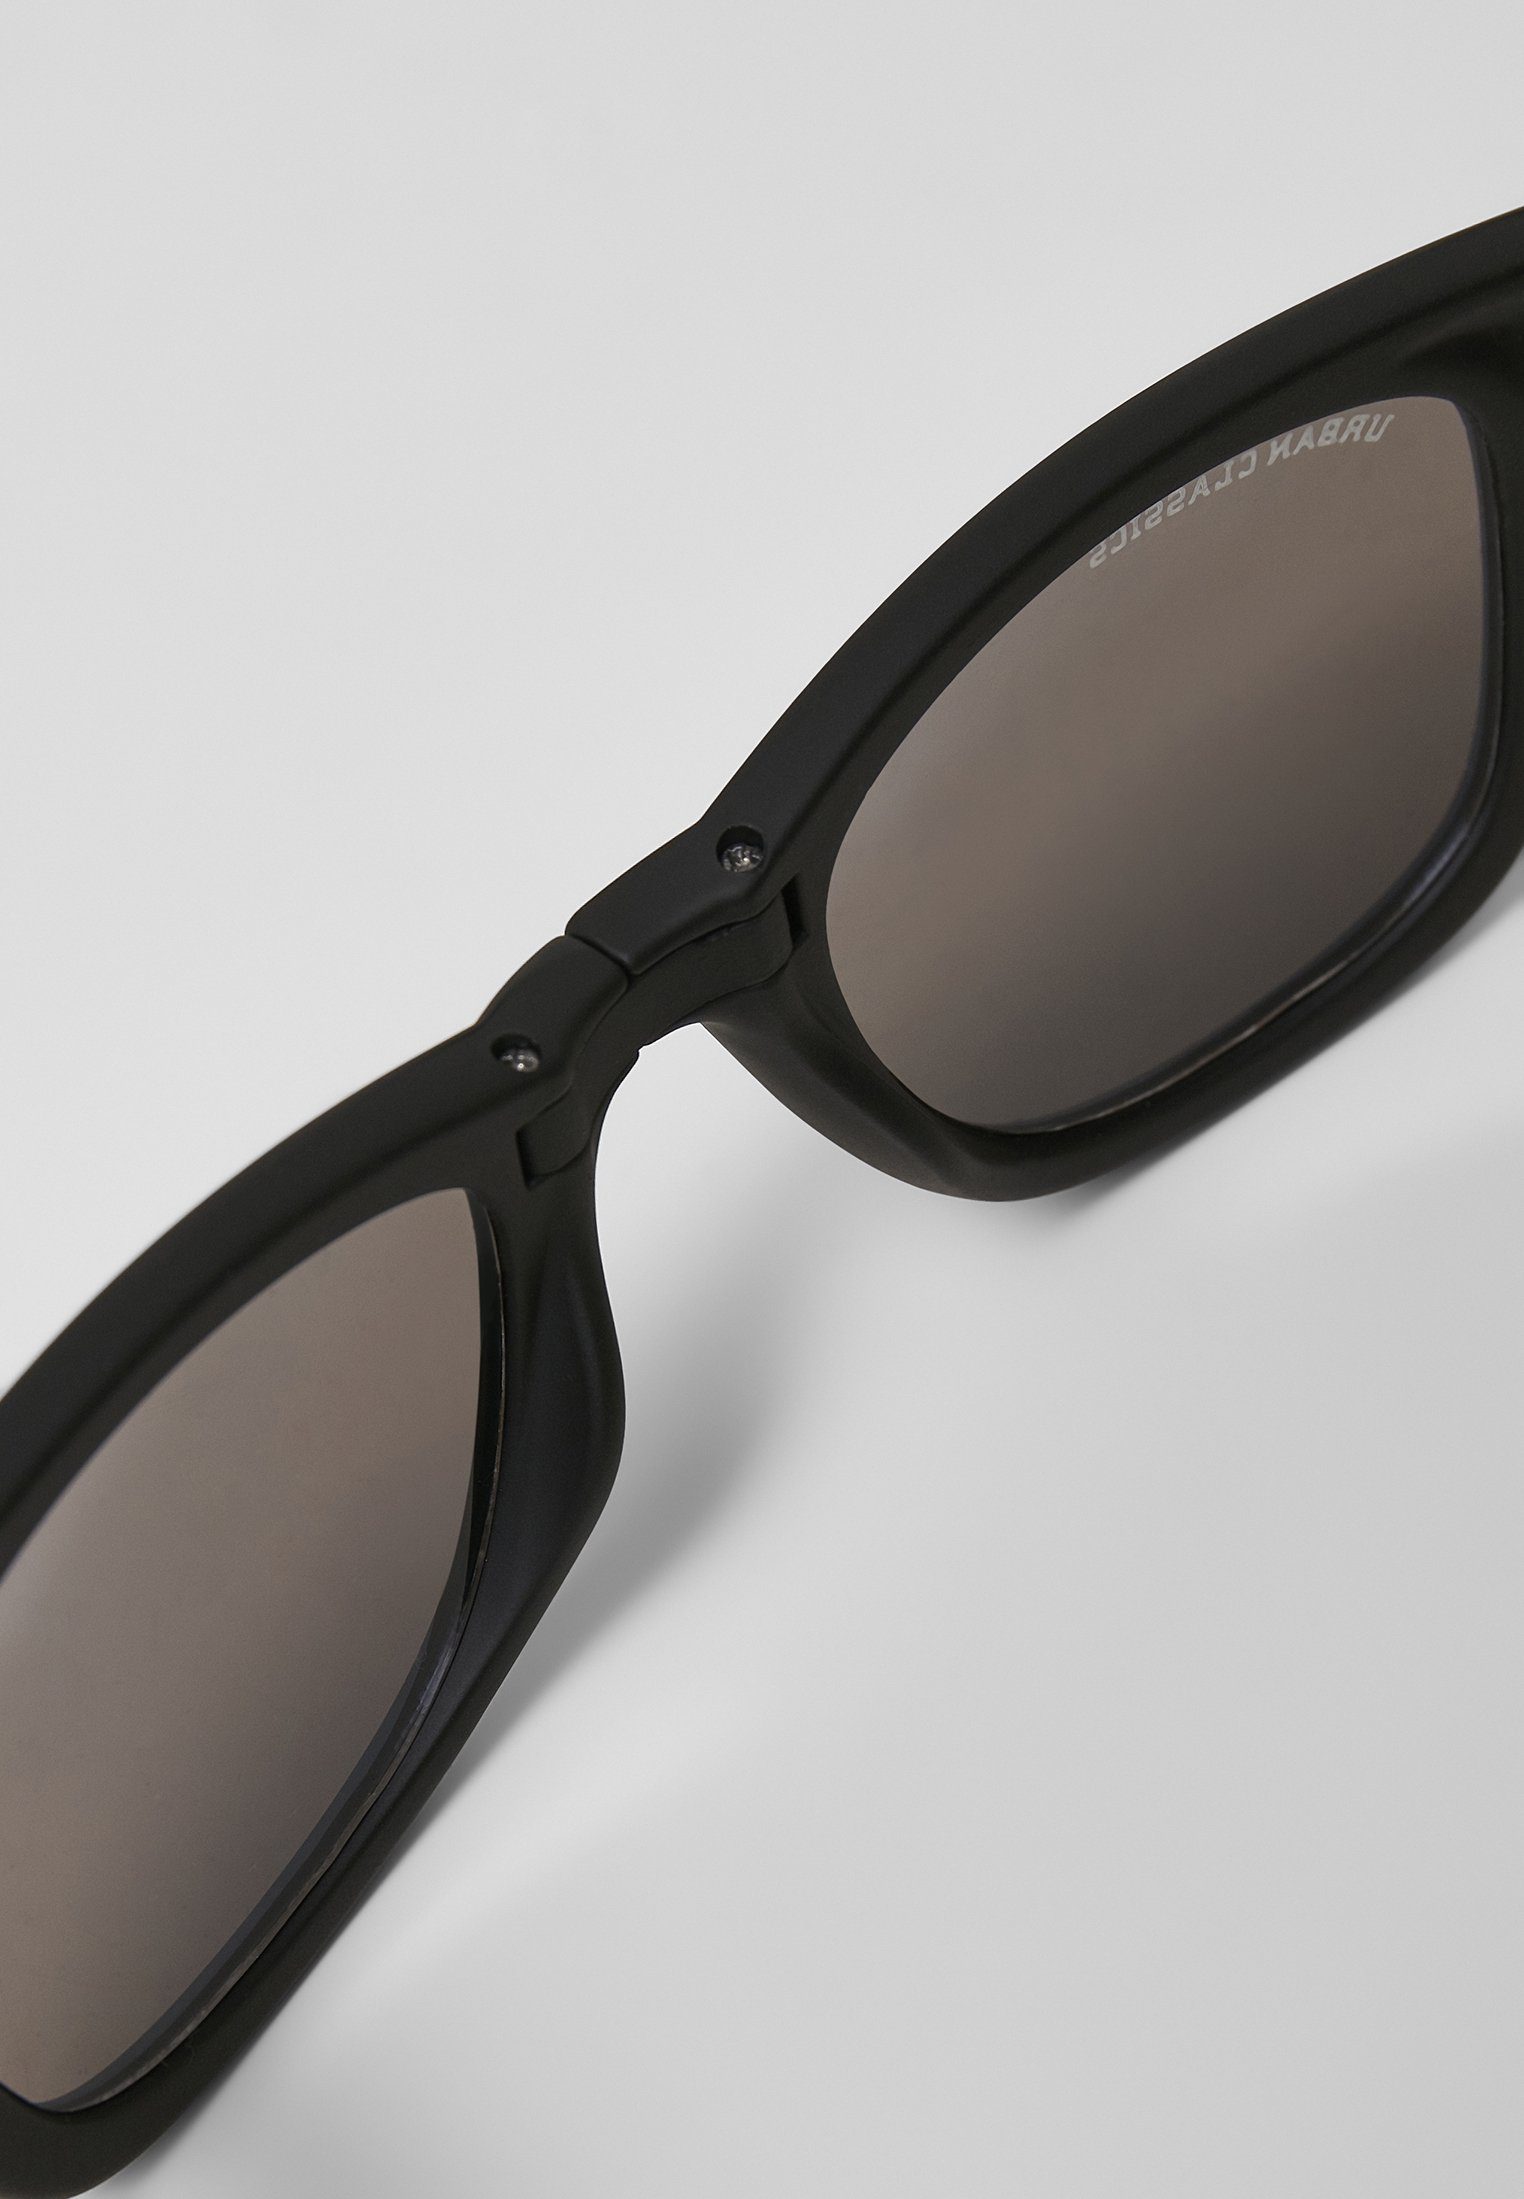 With Sonnenbrille Case Accessoires CLASSICS Sunglasses Foldable URBAN